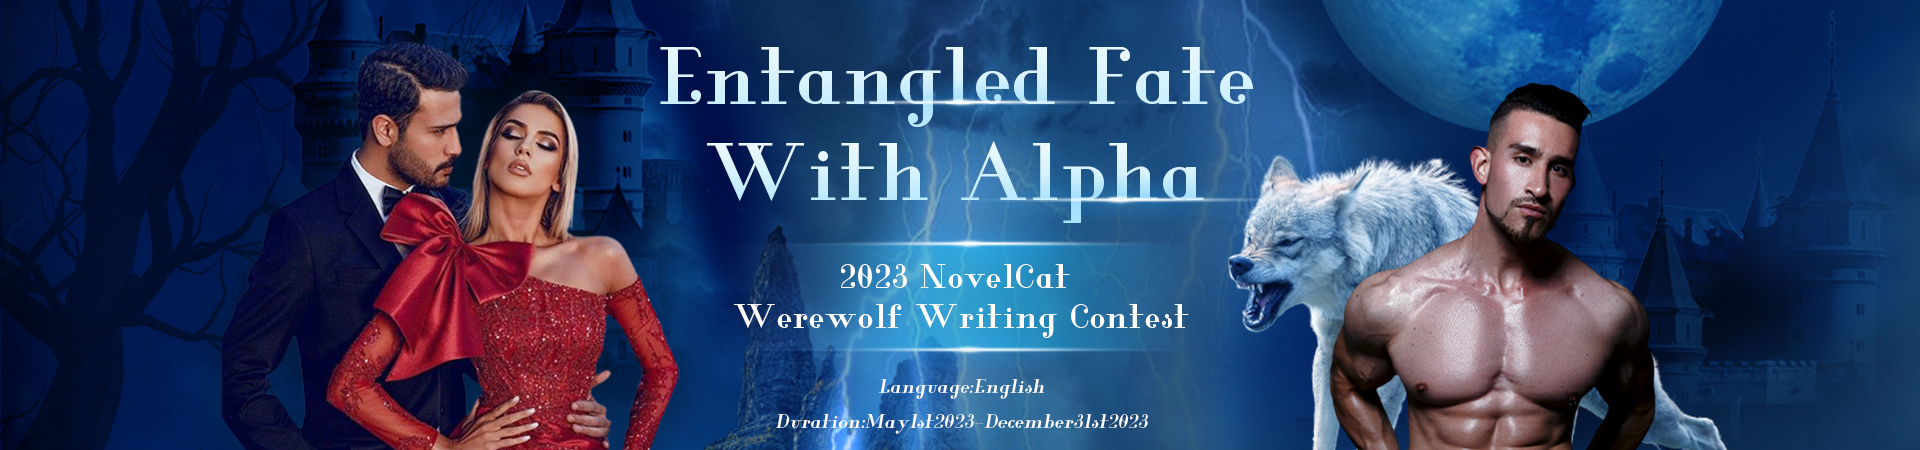 https://www.novel-cat.com/contest/entangled_fate_with_alpha/1293